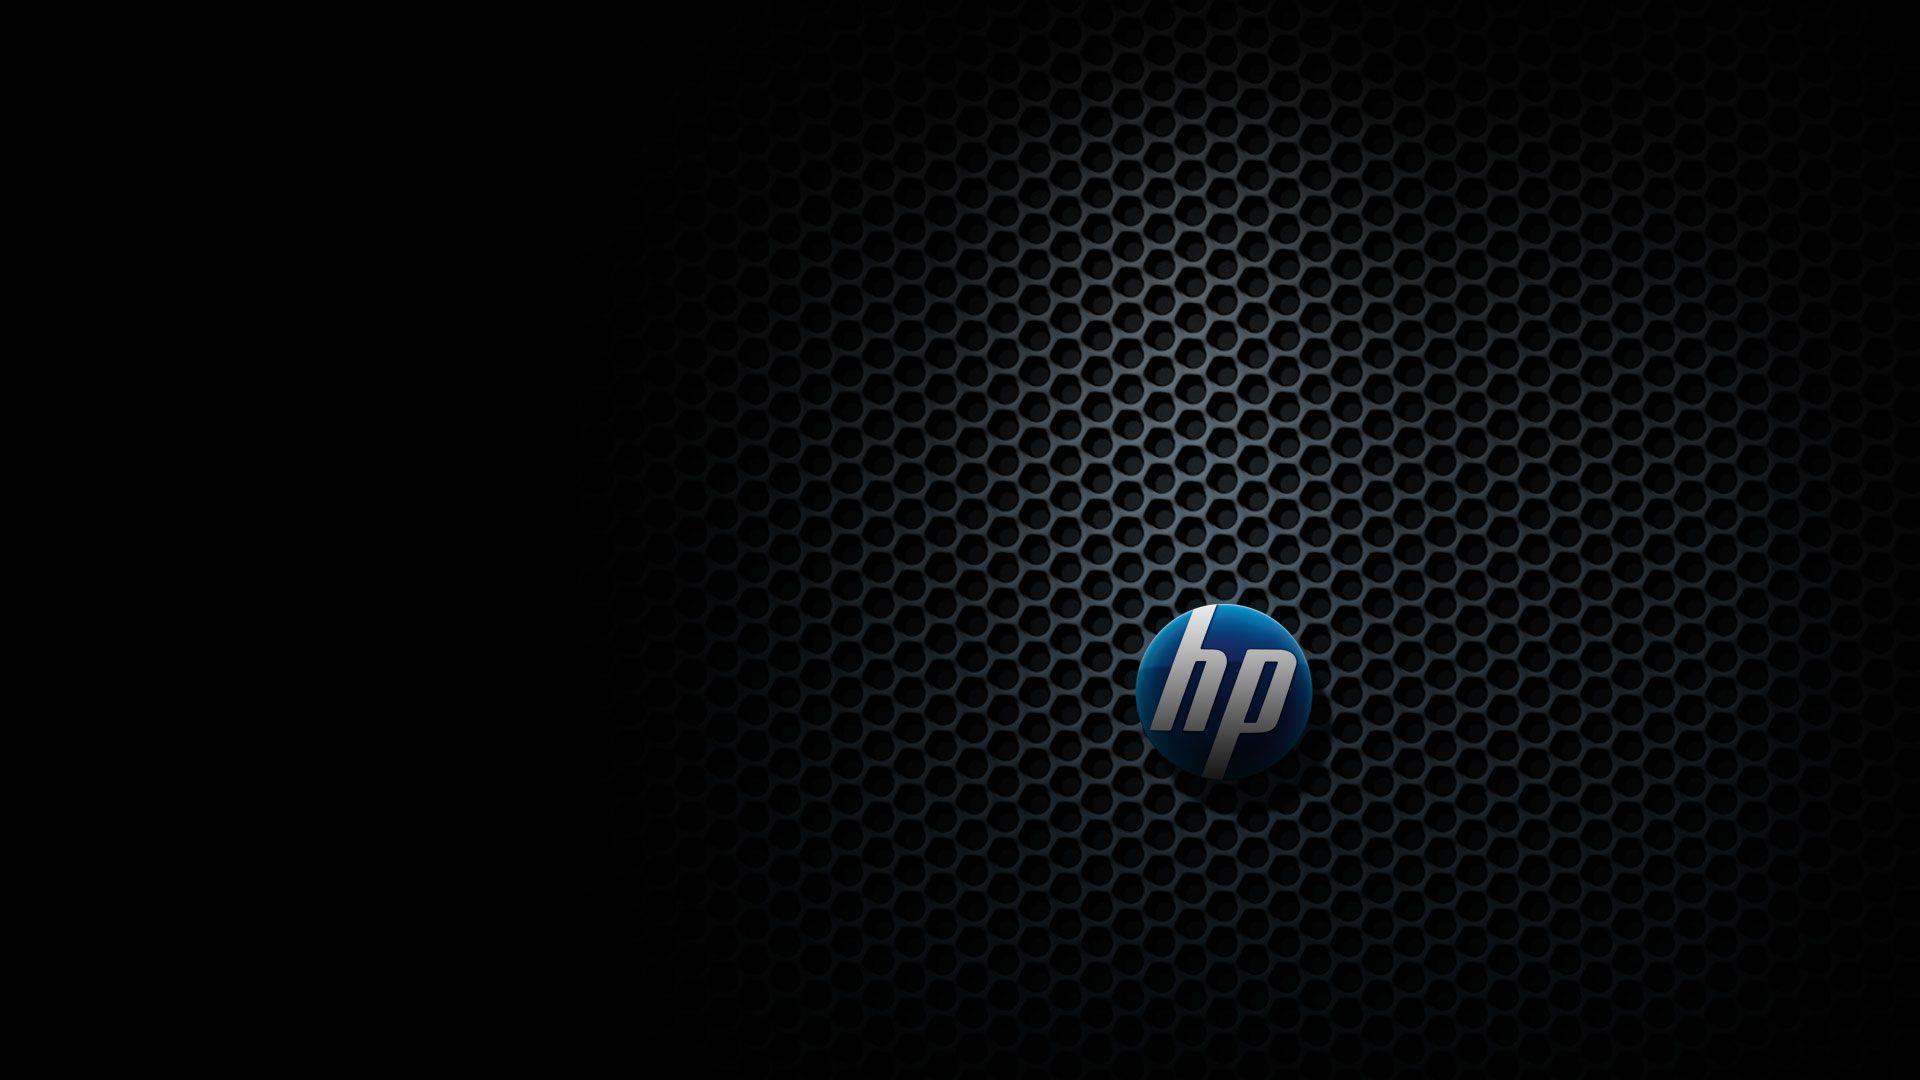 HP Desktop Wallpapers - Top Free HP Desktop Backgrounds - WallpaperAccess